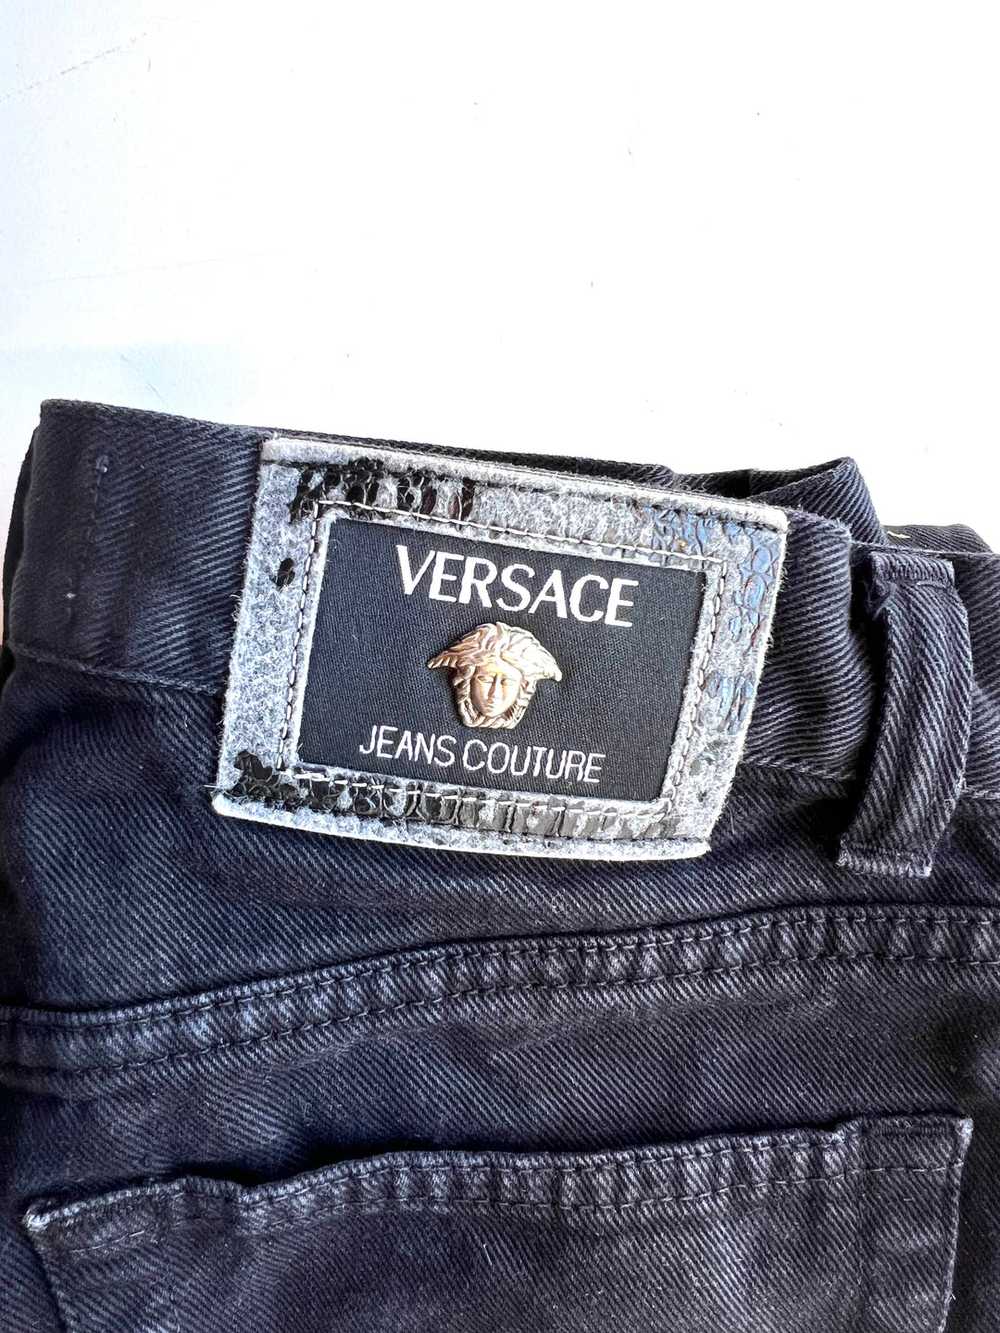 Vintage Versace Couture Jeans - image 6